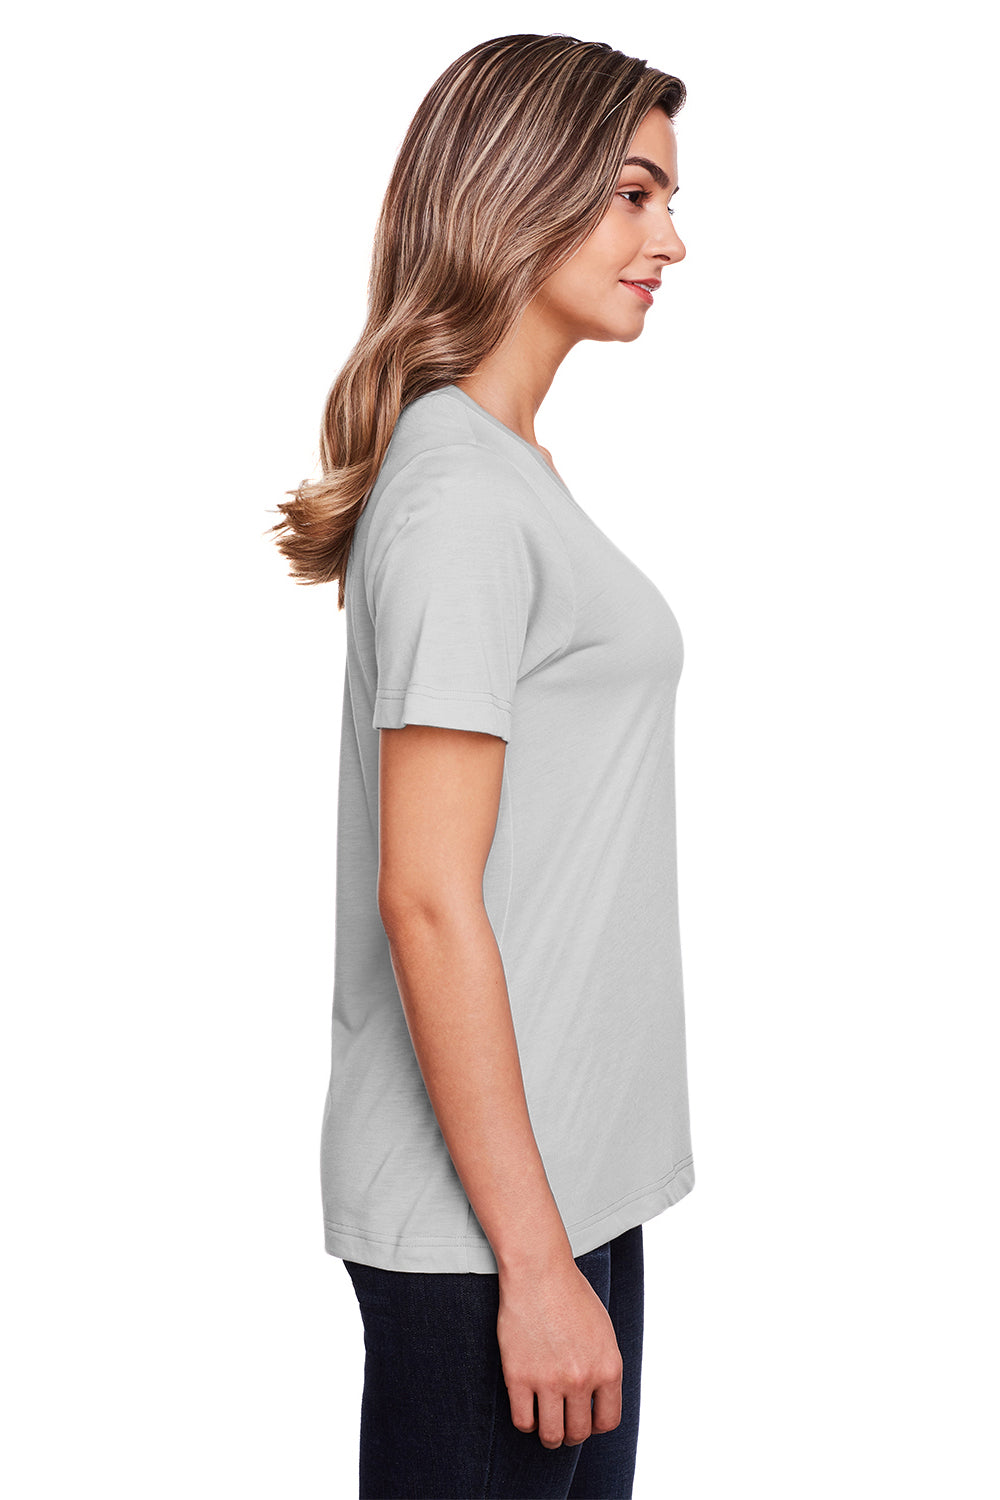 Core 365 CE111W Womens Fusion ChromaSoft Performance Moisture Wicking Short Sleeve Scoop Neck T-Shirt Platinum Grey Side